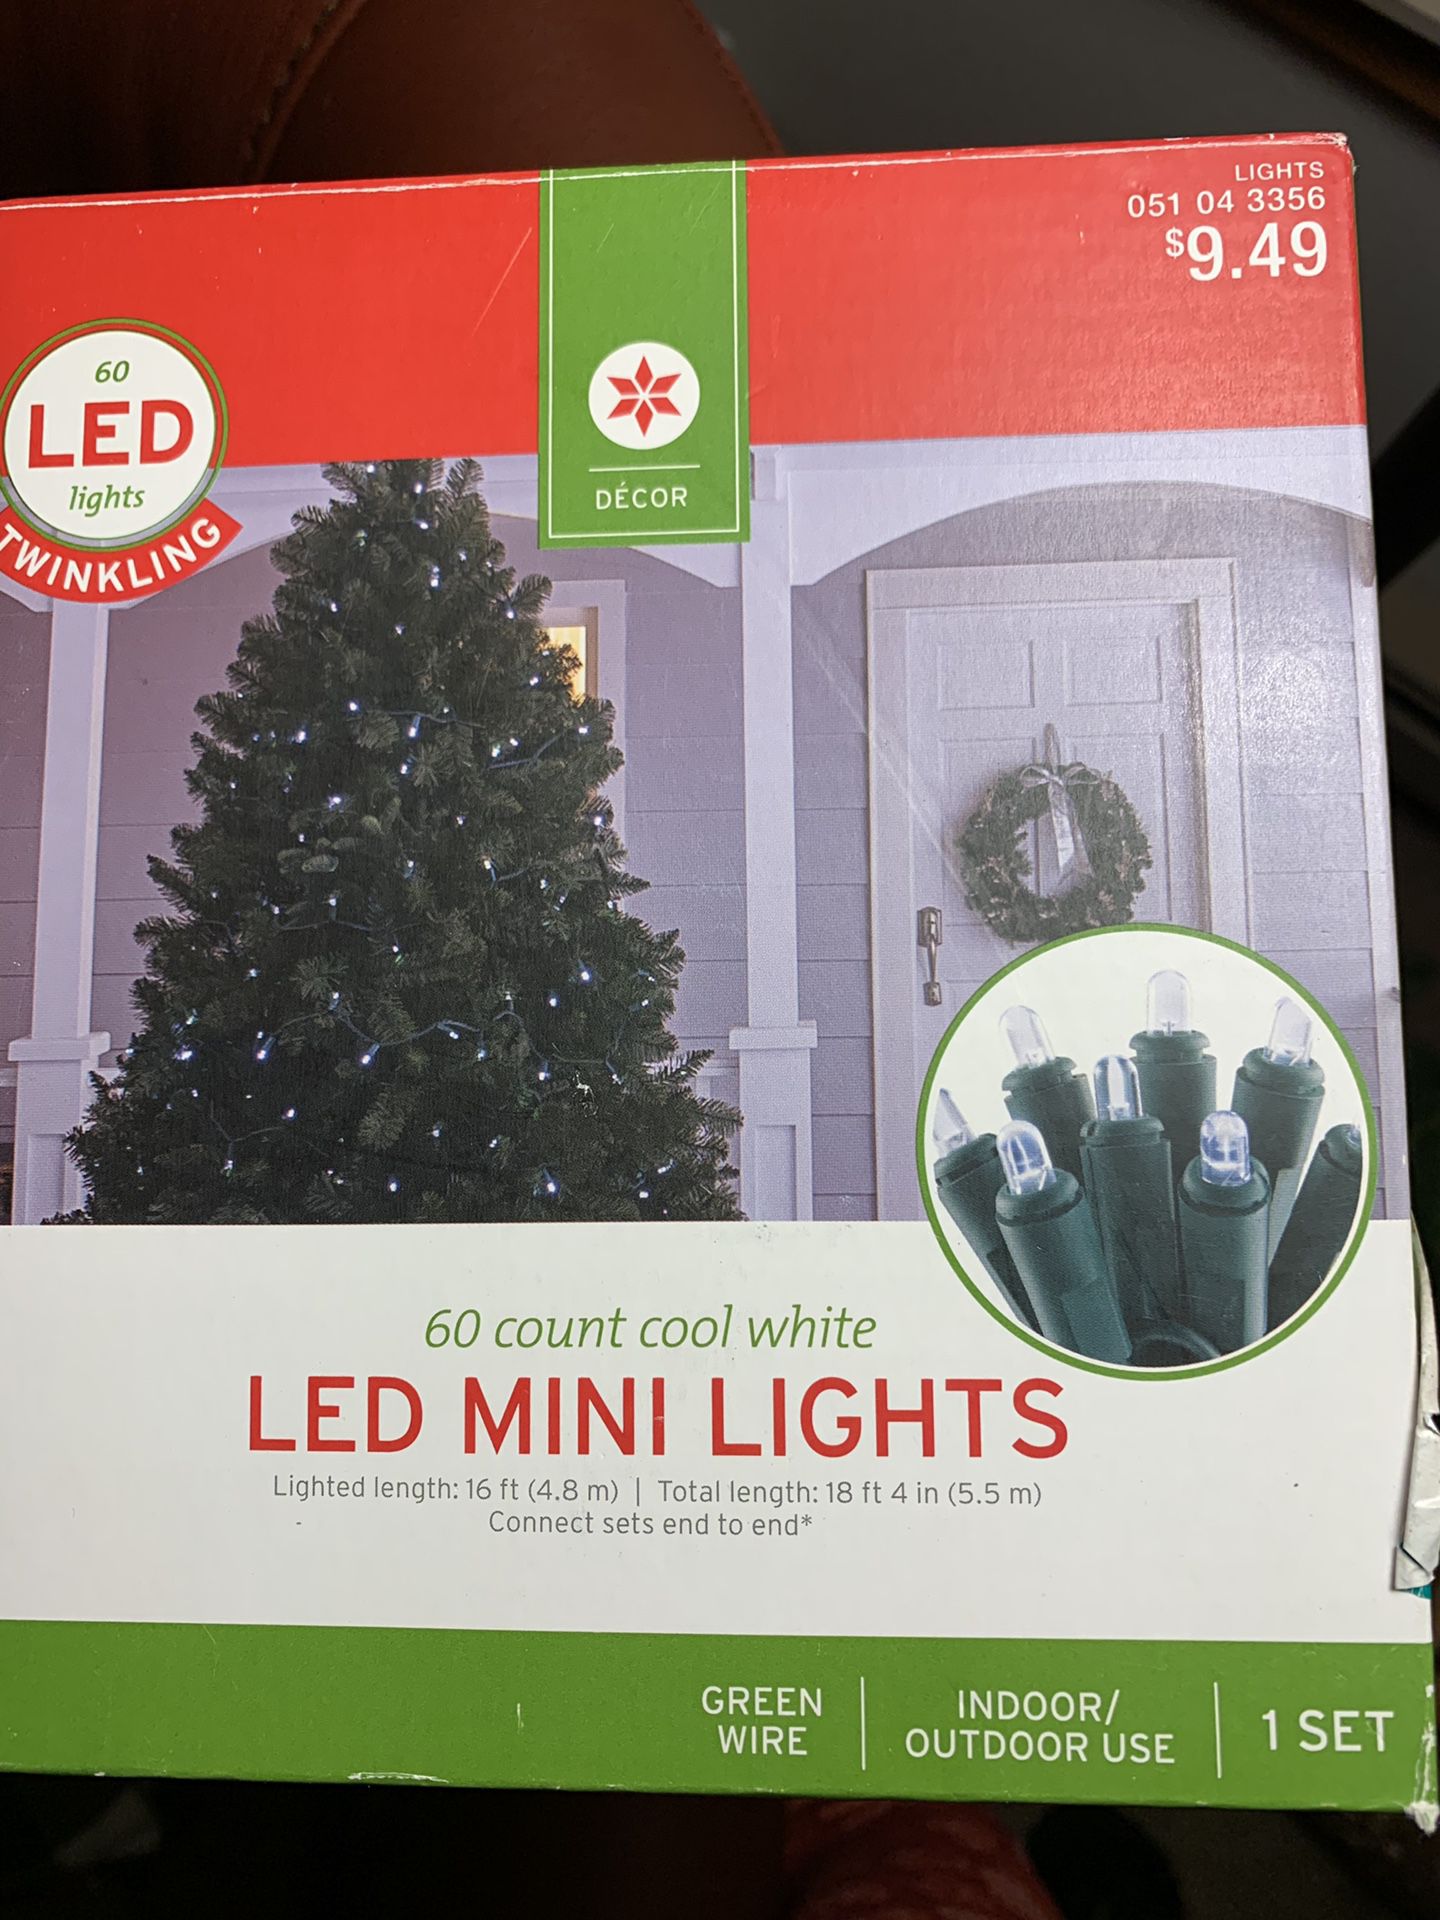 New LED lights 2 boxes $10